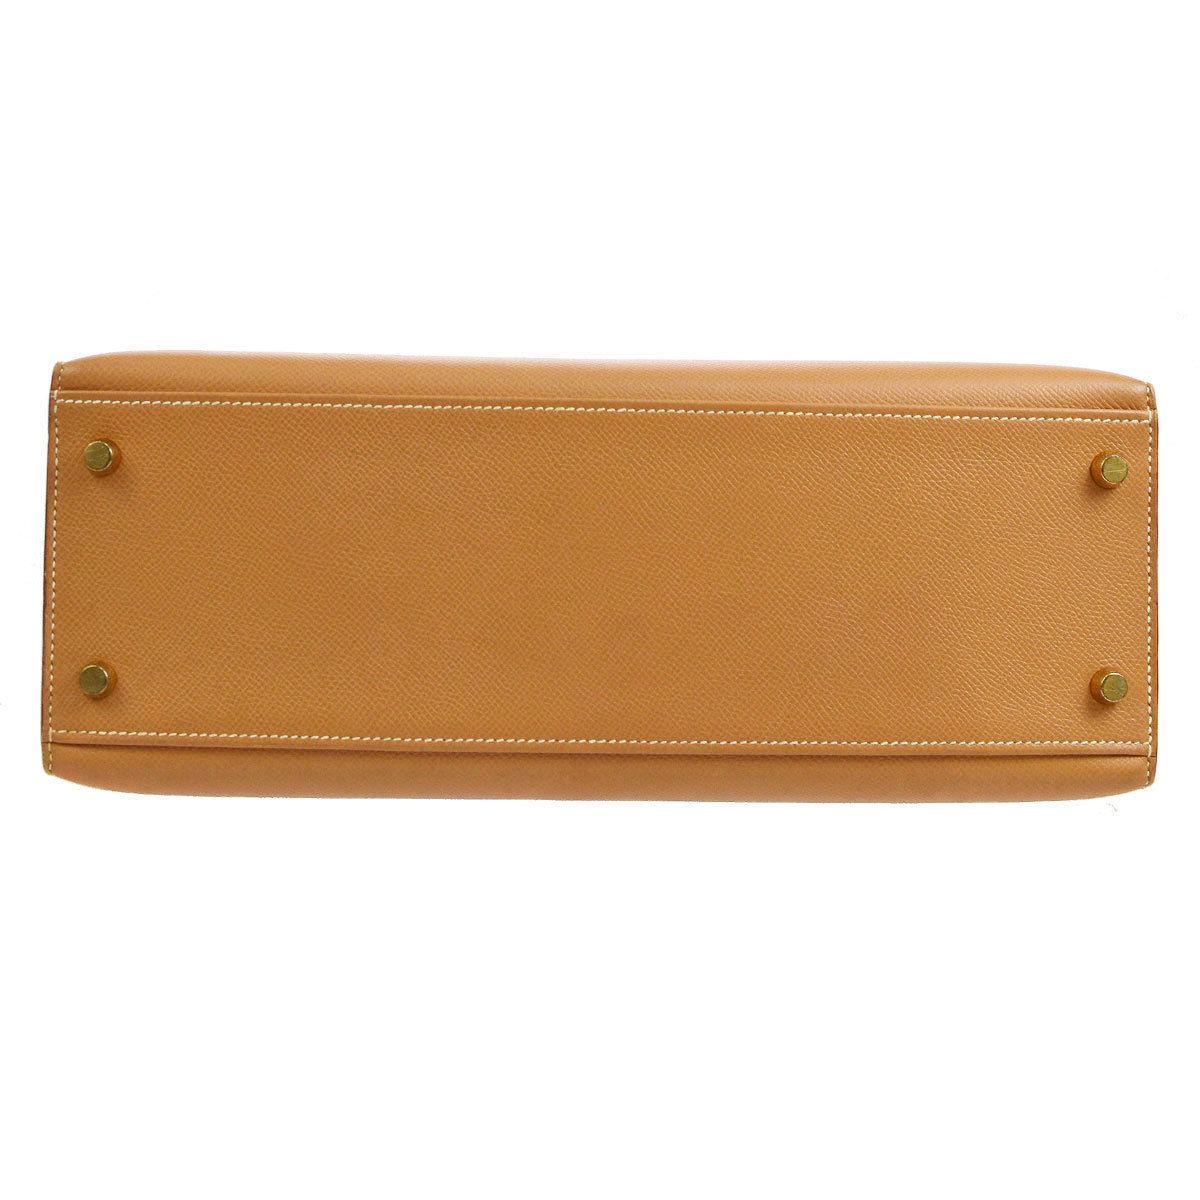 Brown Hermes Kelly 32 Cognac Tan Leather Gold Top Handle Satchel Shoulder Bag